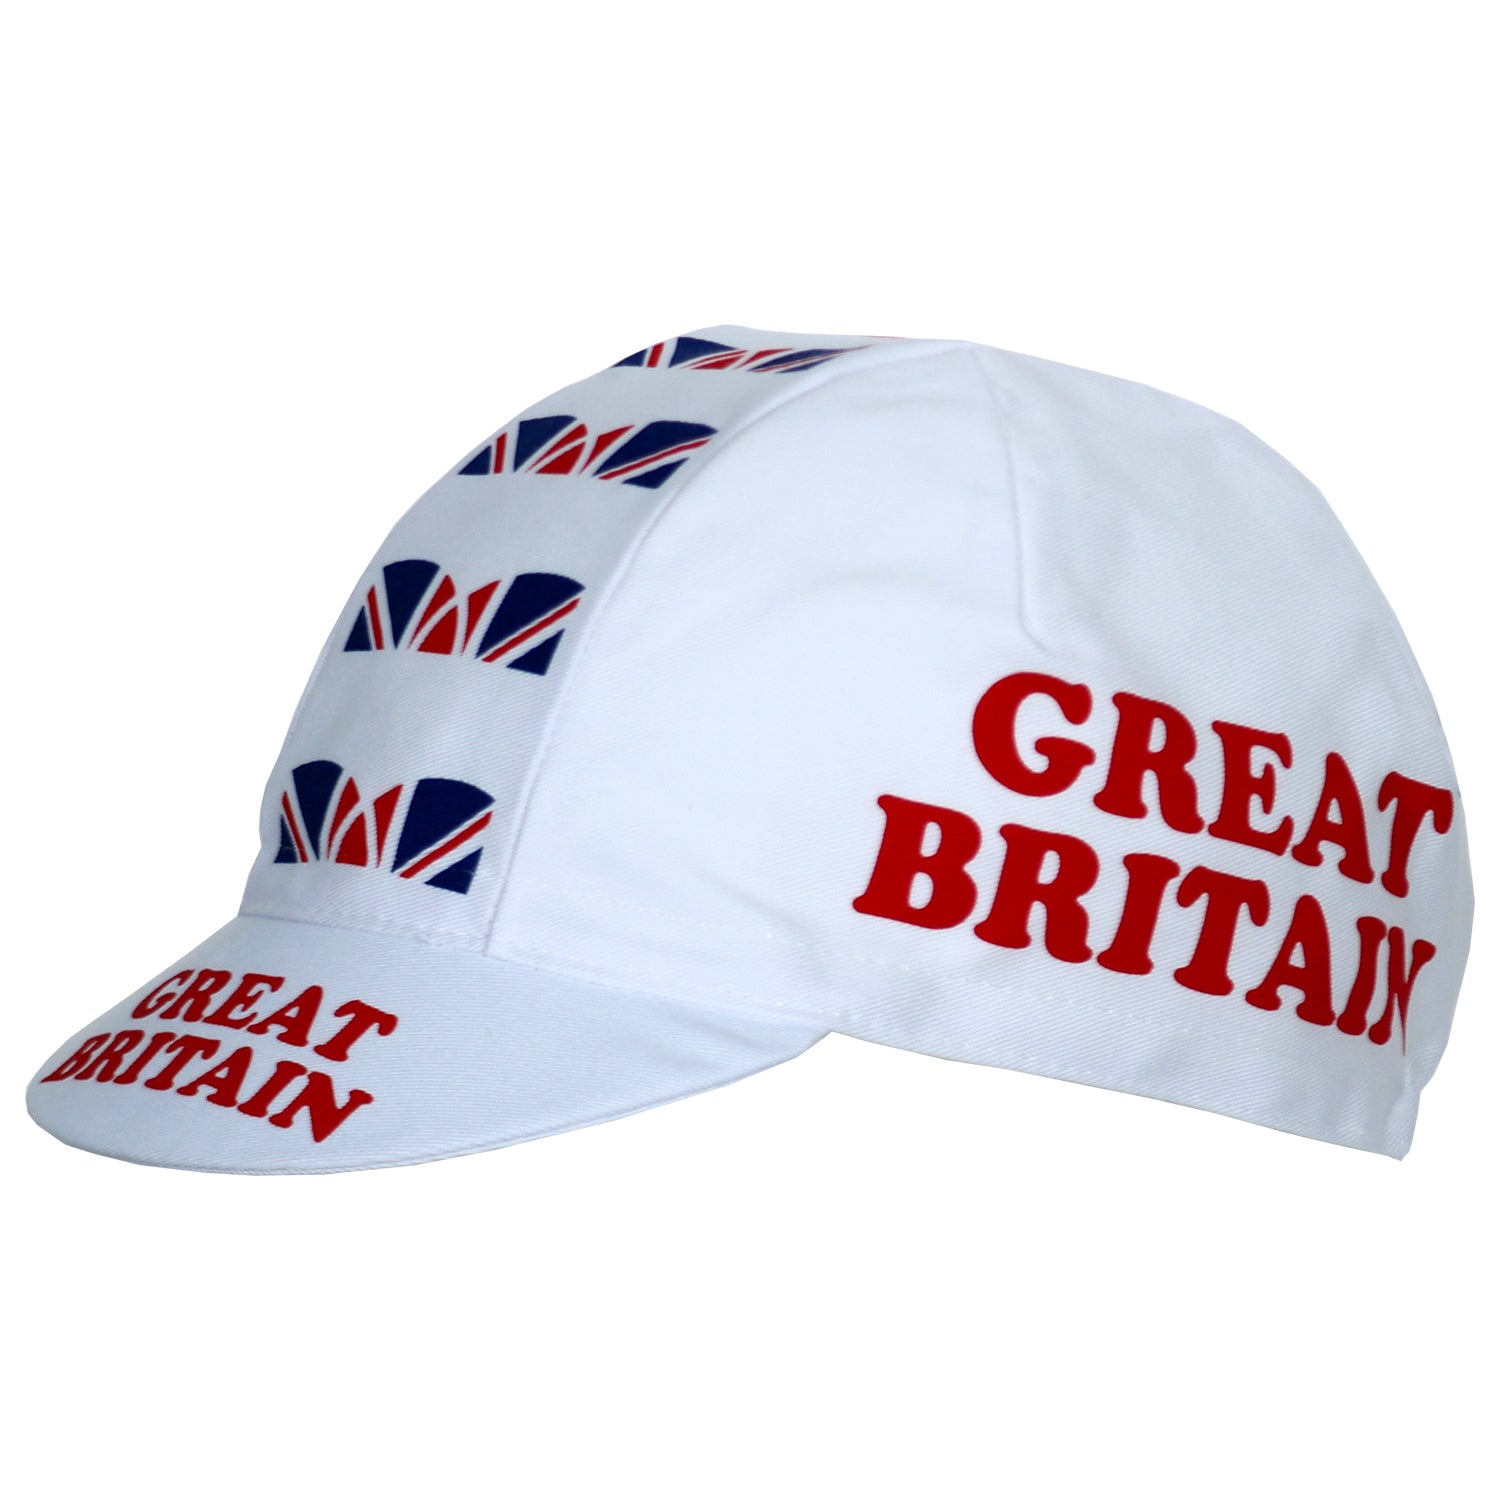 Great Britain Cycling Cap